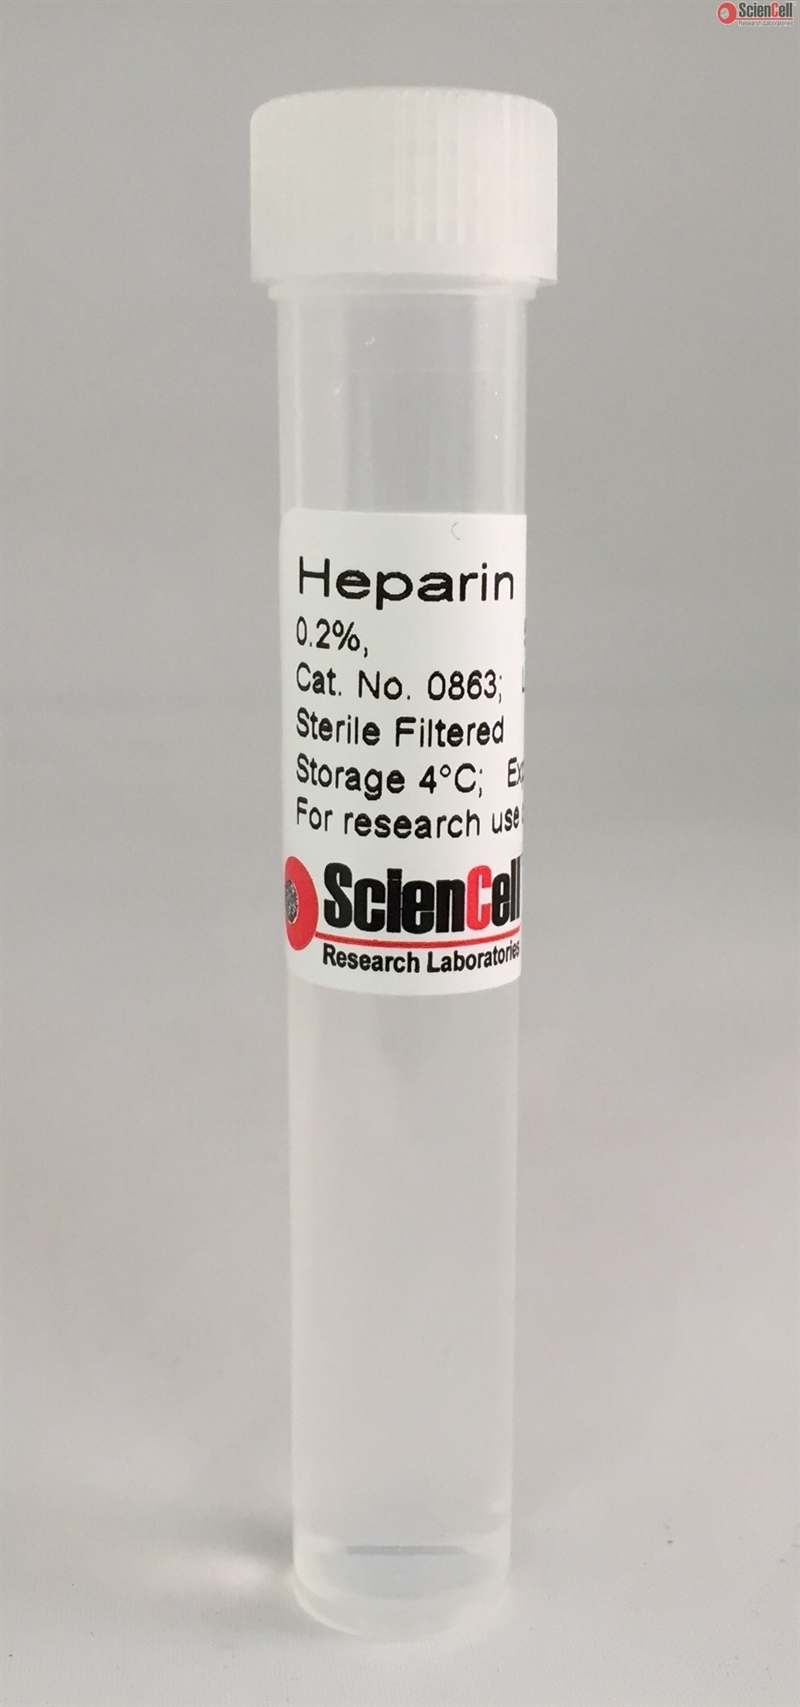 0,2% Heparin sodium salt in DPBS solution 